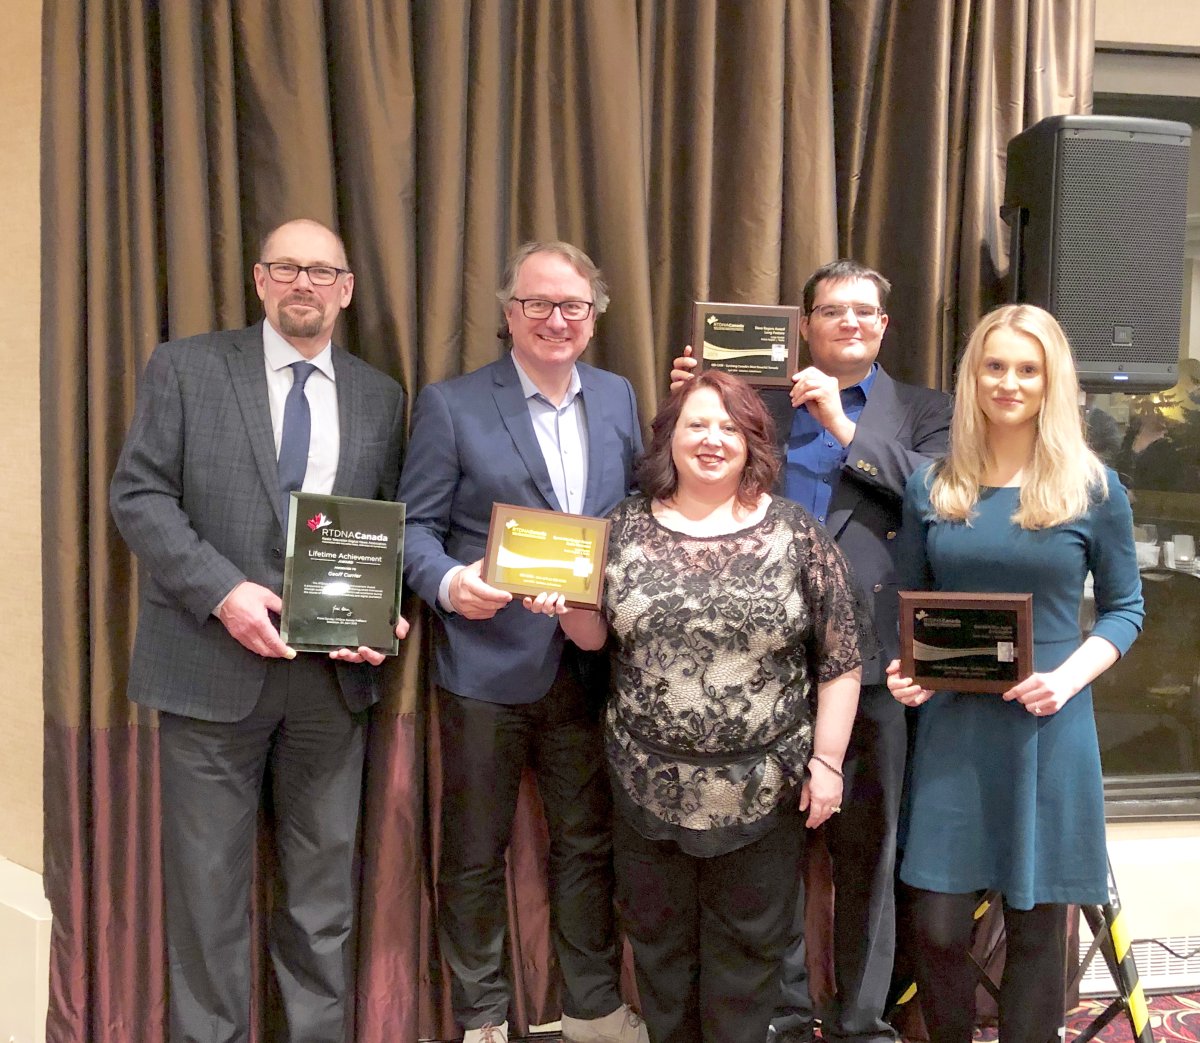 680 CJOB and Global News award winners at the 2019 RTDNA dinner in Saskatoon.